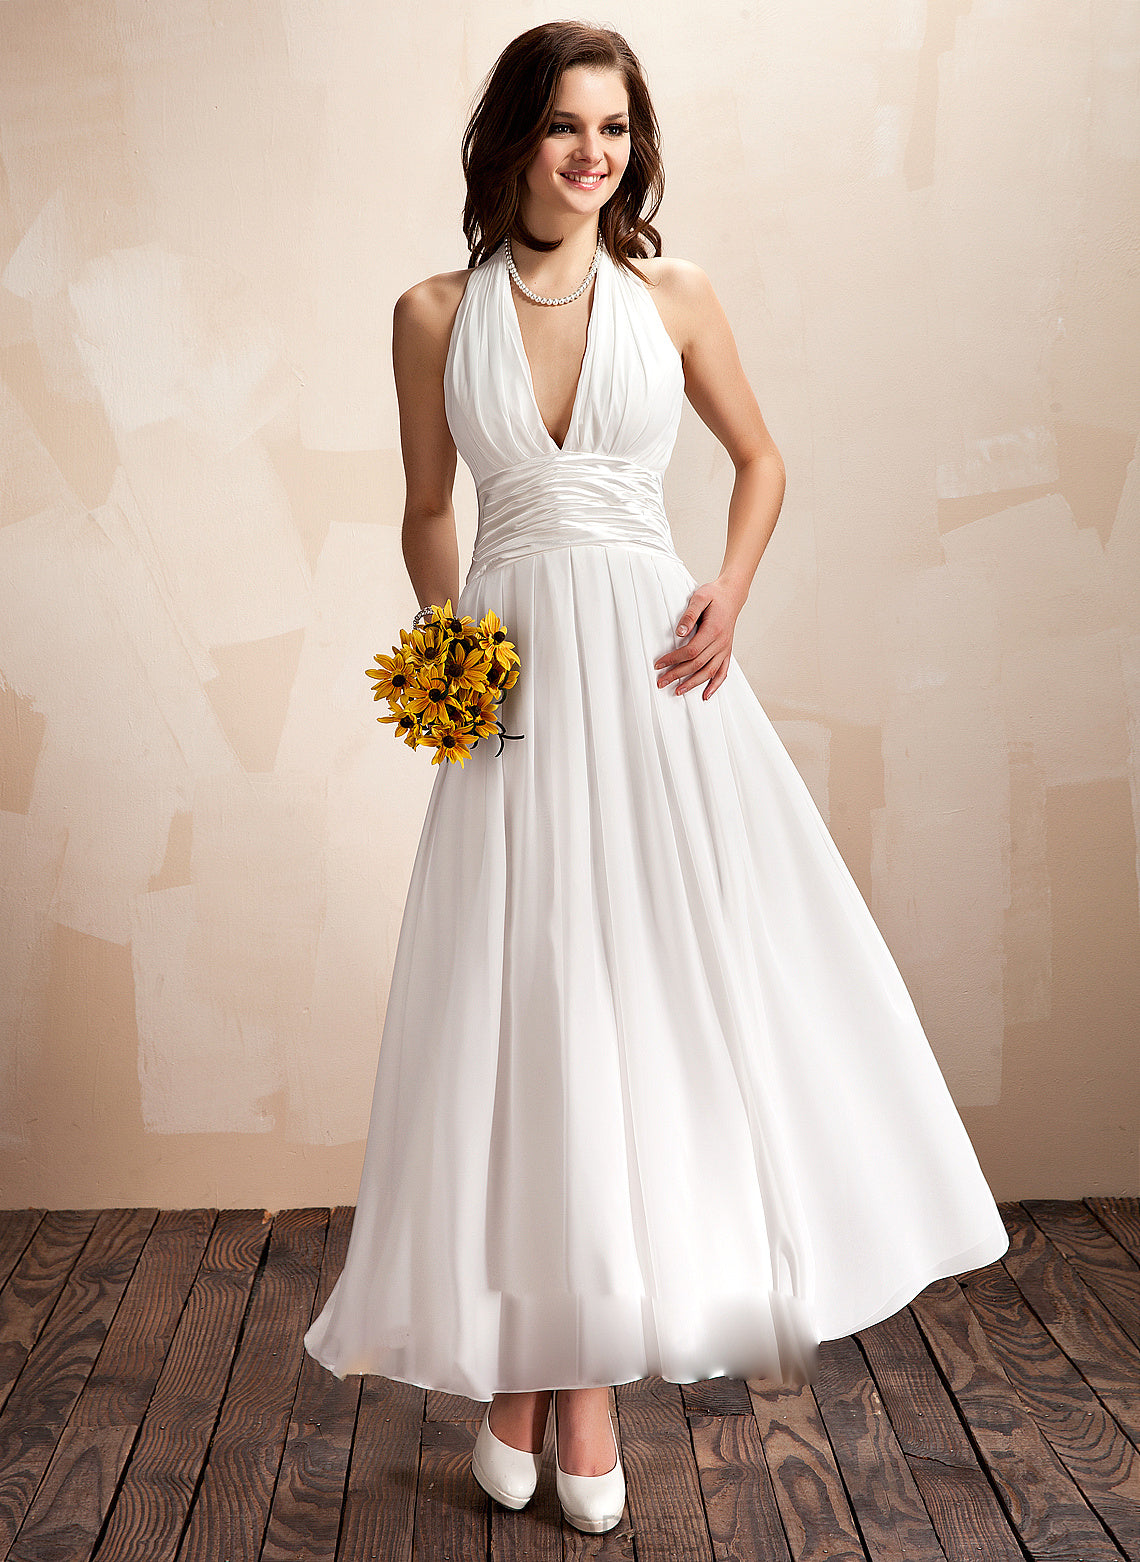 Dress With Bow(s) Halter Wedding Dresses Chiffon Wedding A-Line Kaylee Ankle-Length Ruffle